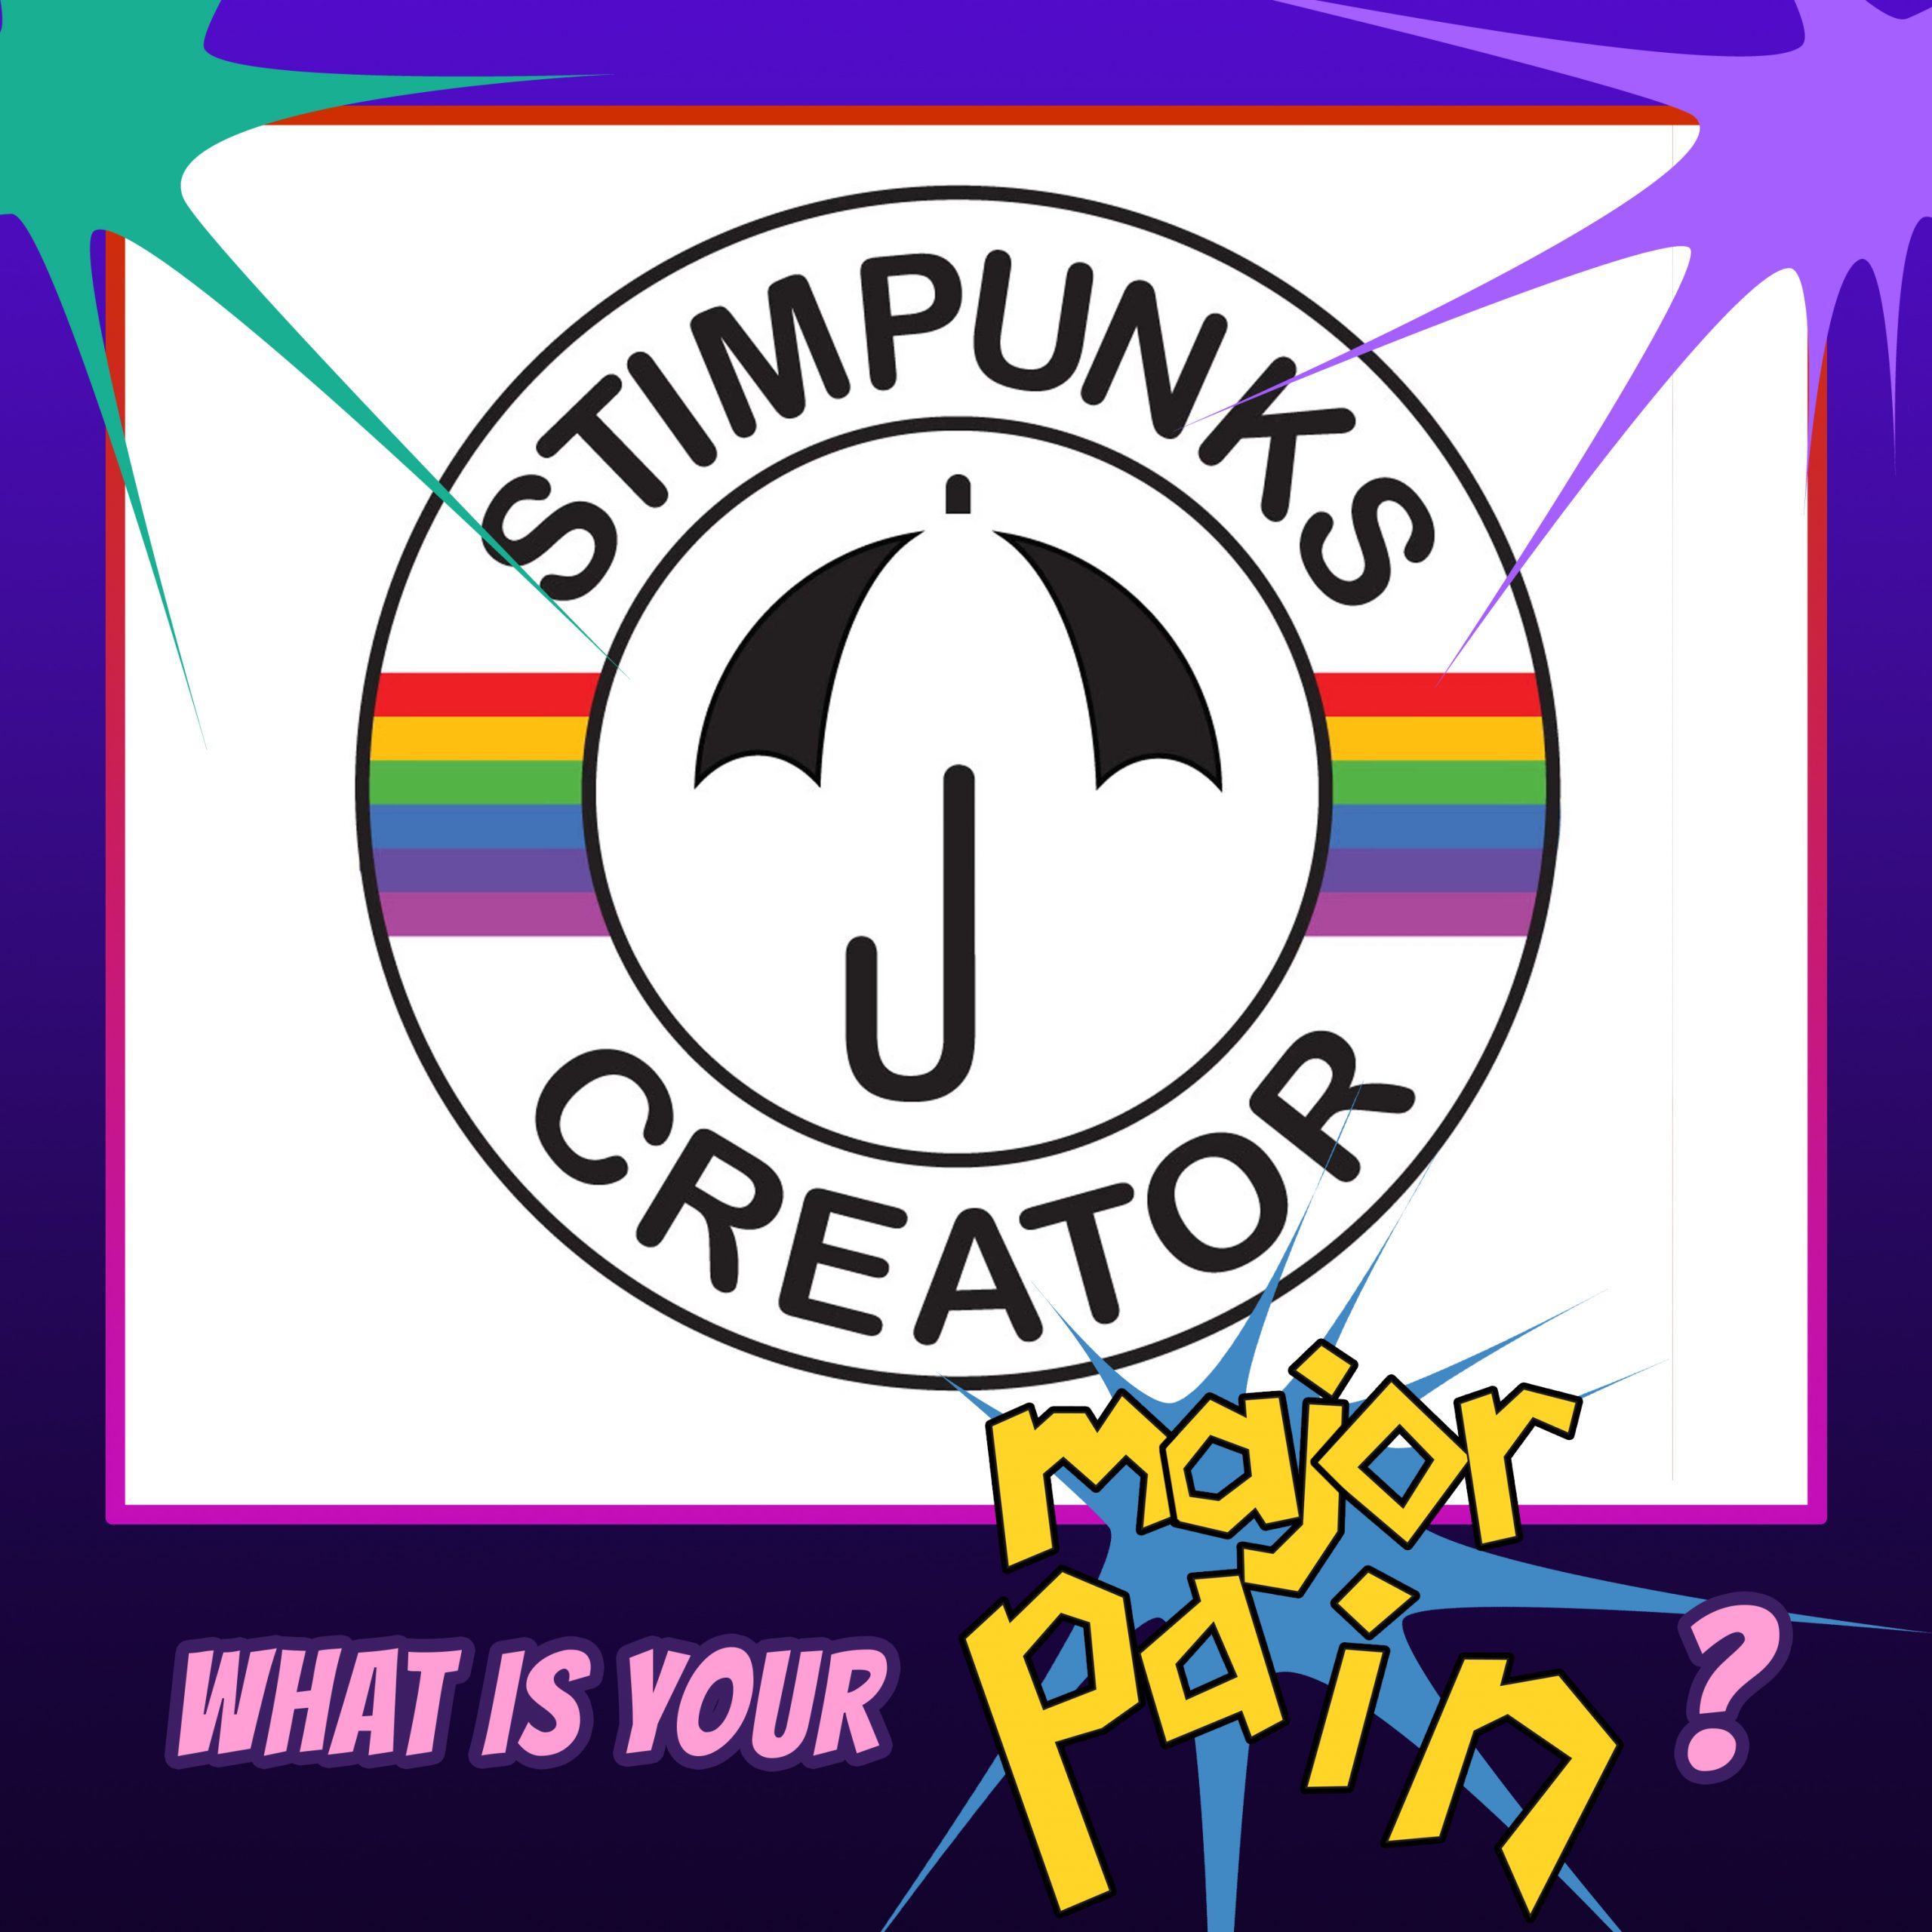 A logo for the Stimpunks Foundation